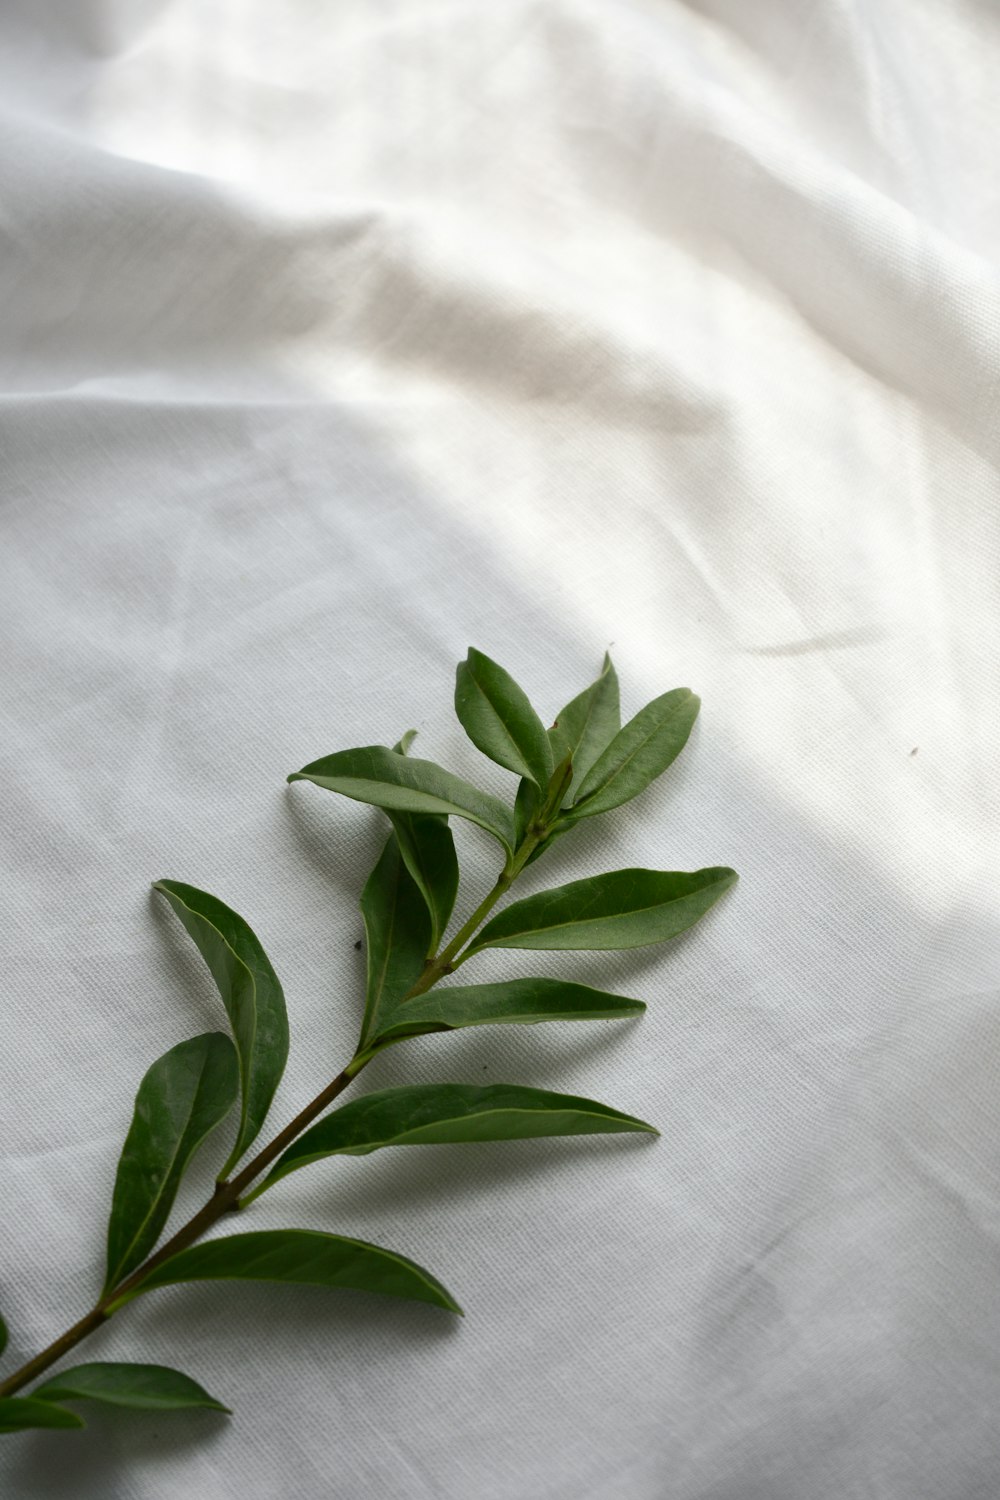 foglie verdi su tessuto bianco